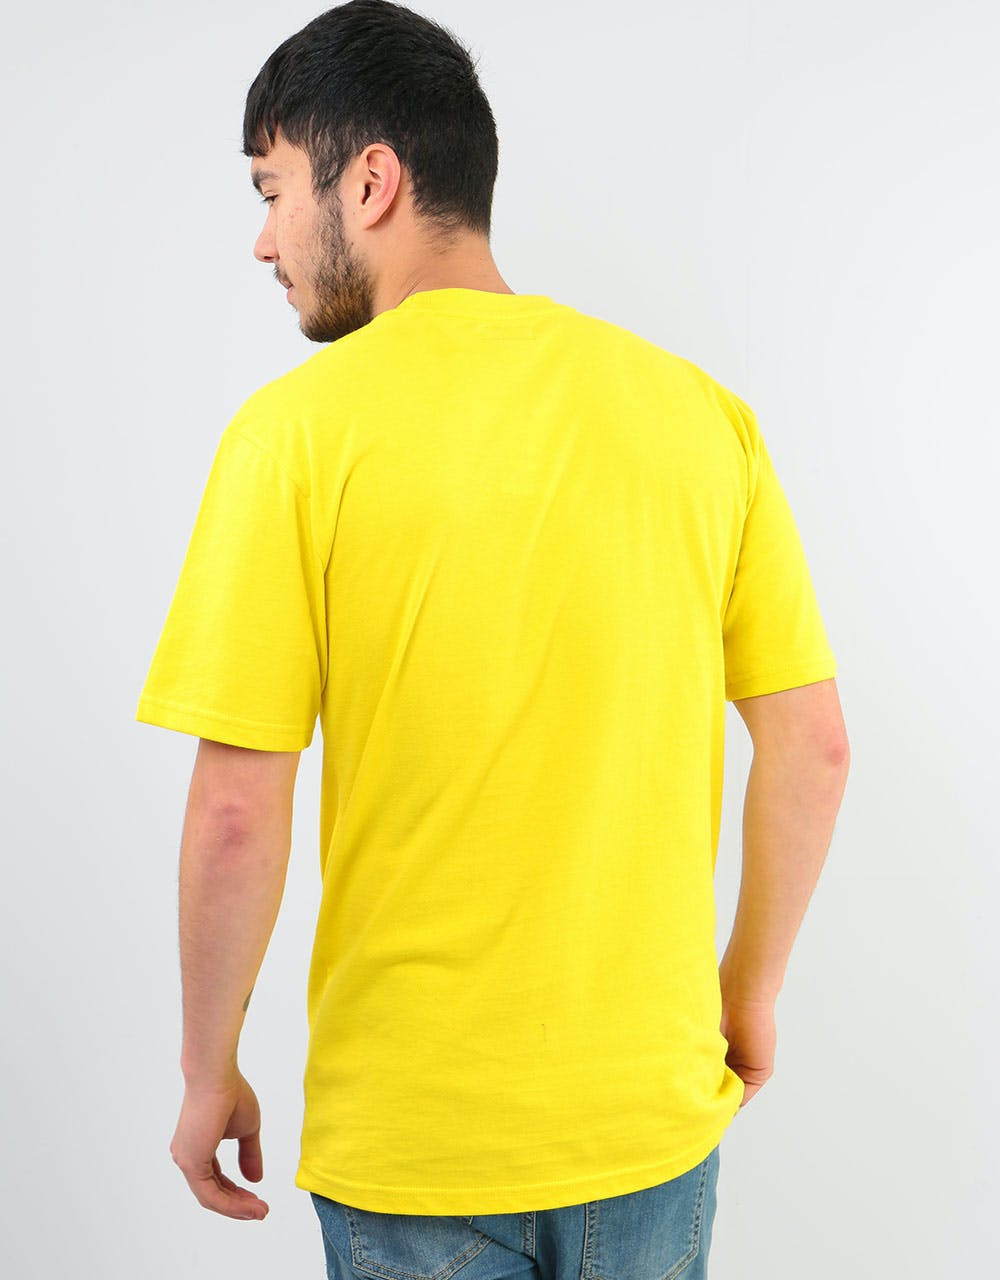 Chinatown Market Smiley Logo T-Shirt - Yellow